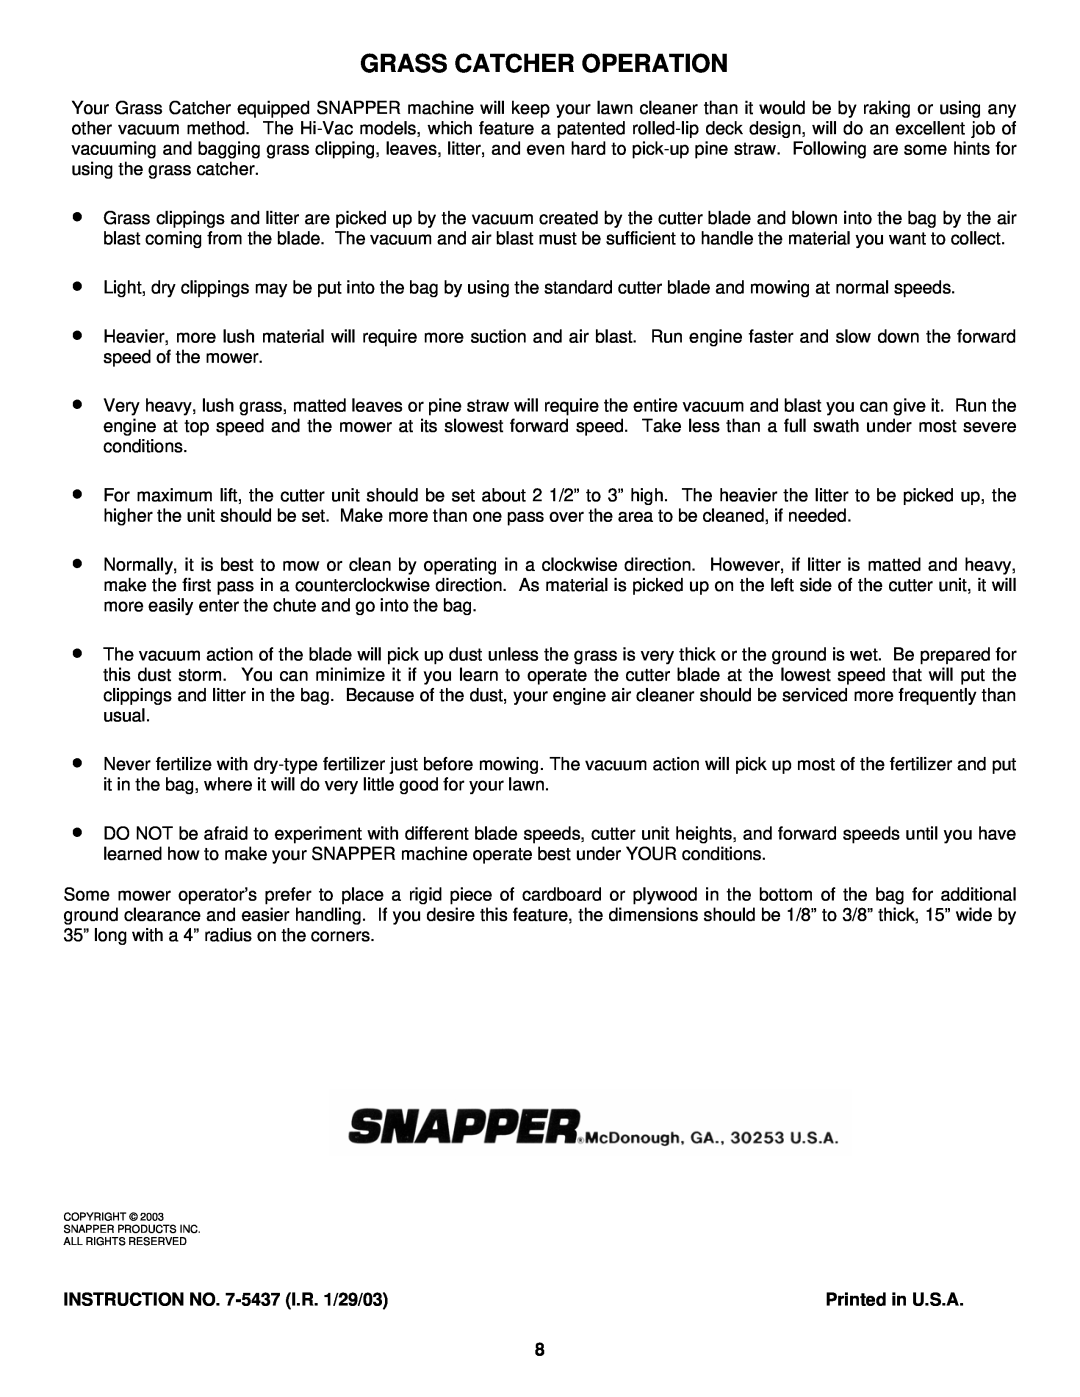 Snapper 6-3317 manual Grass Catcher Operation, INSTRUCTION NO. 7-5437I.R. 1/29/03 